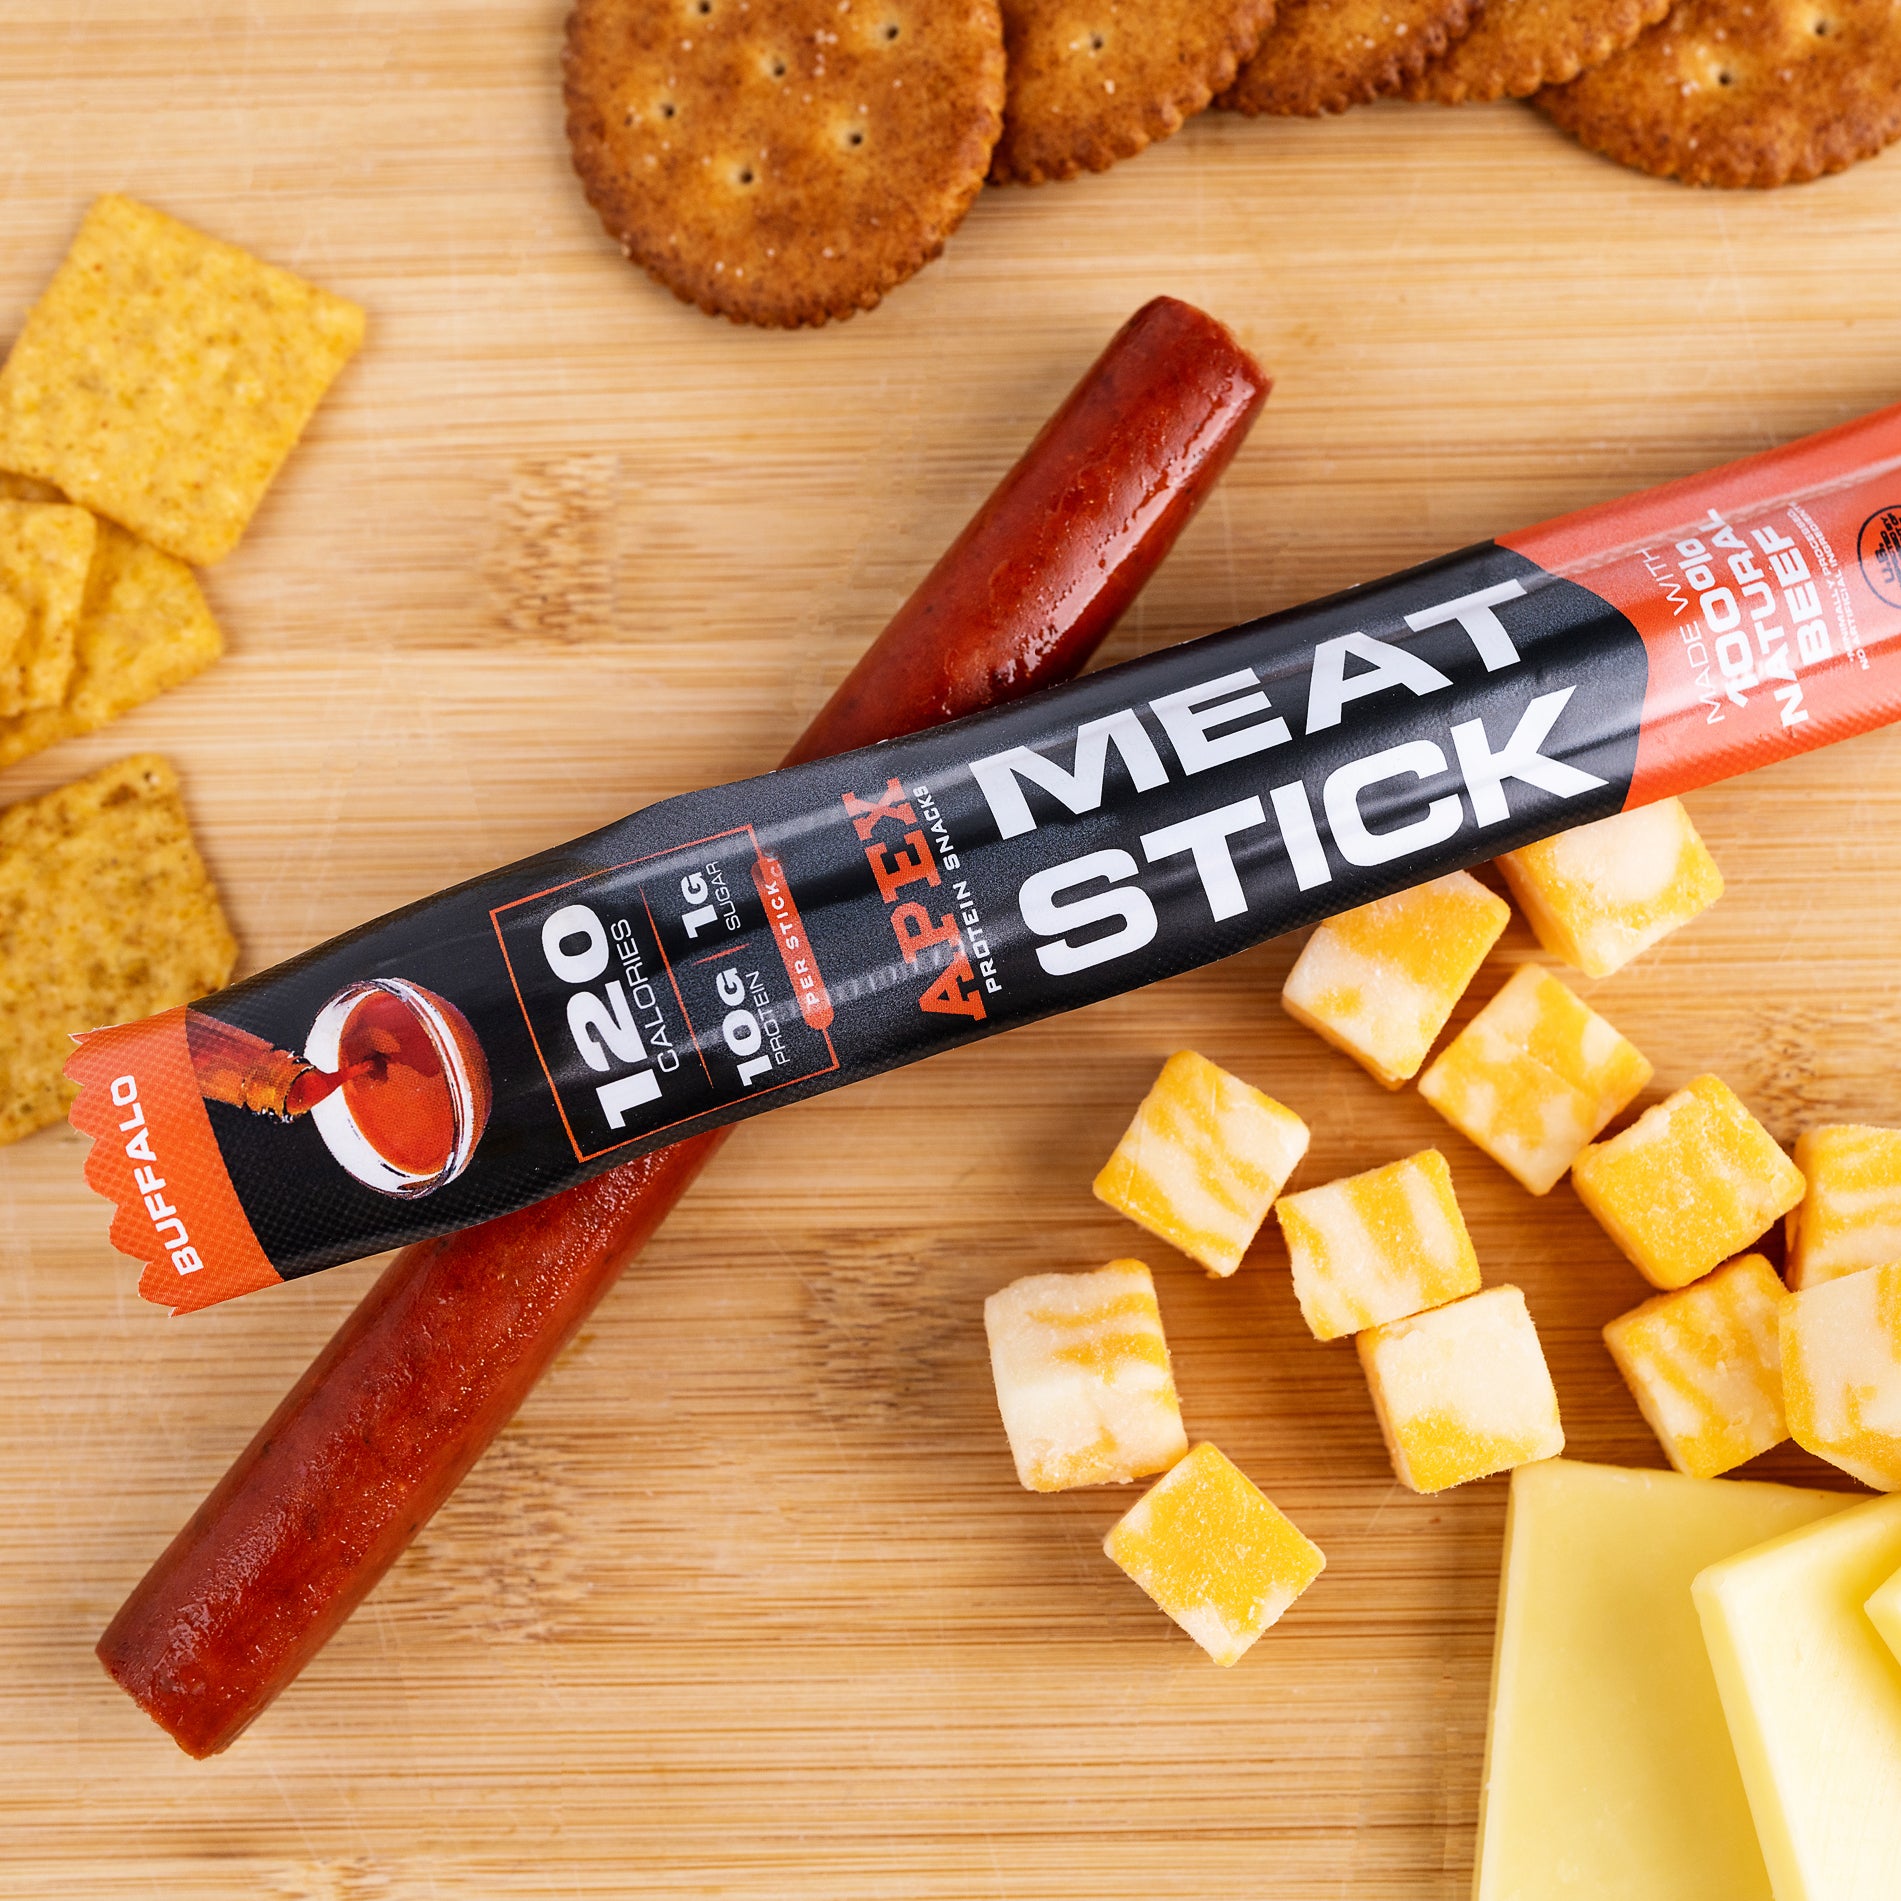 Buffalo flavor meat stick - Apex protein snacks